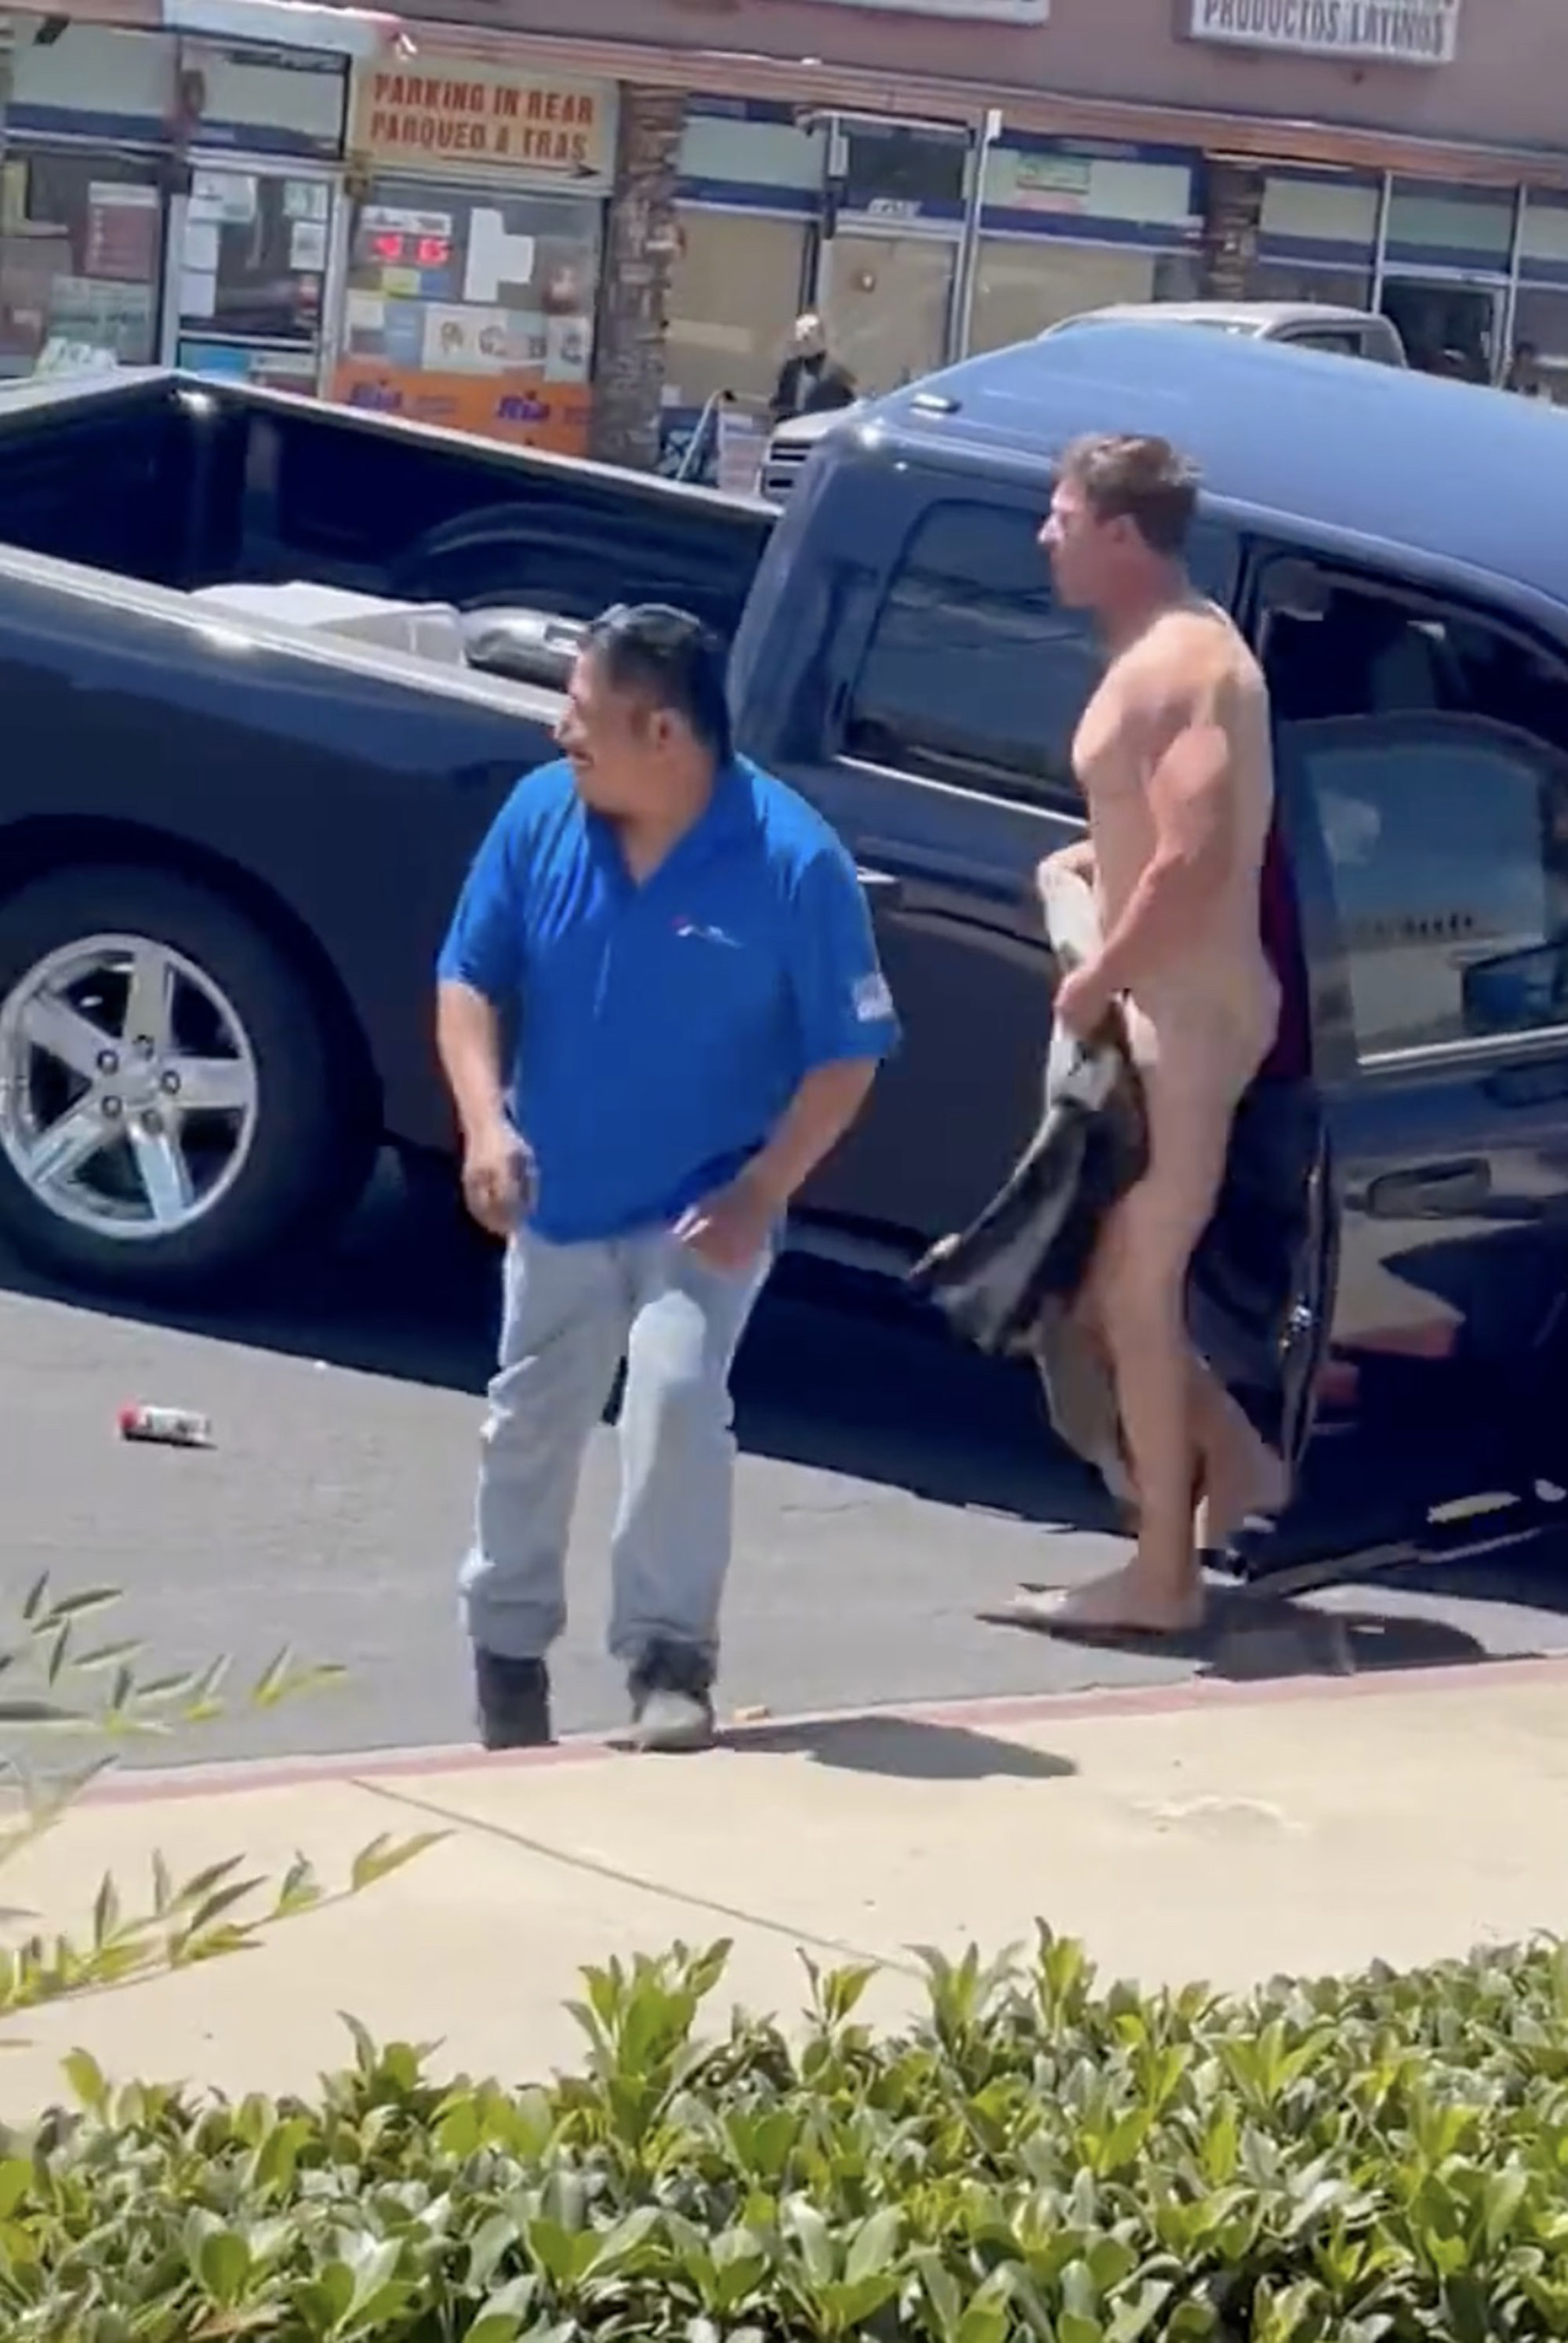 bill grant add naked men in cars photo